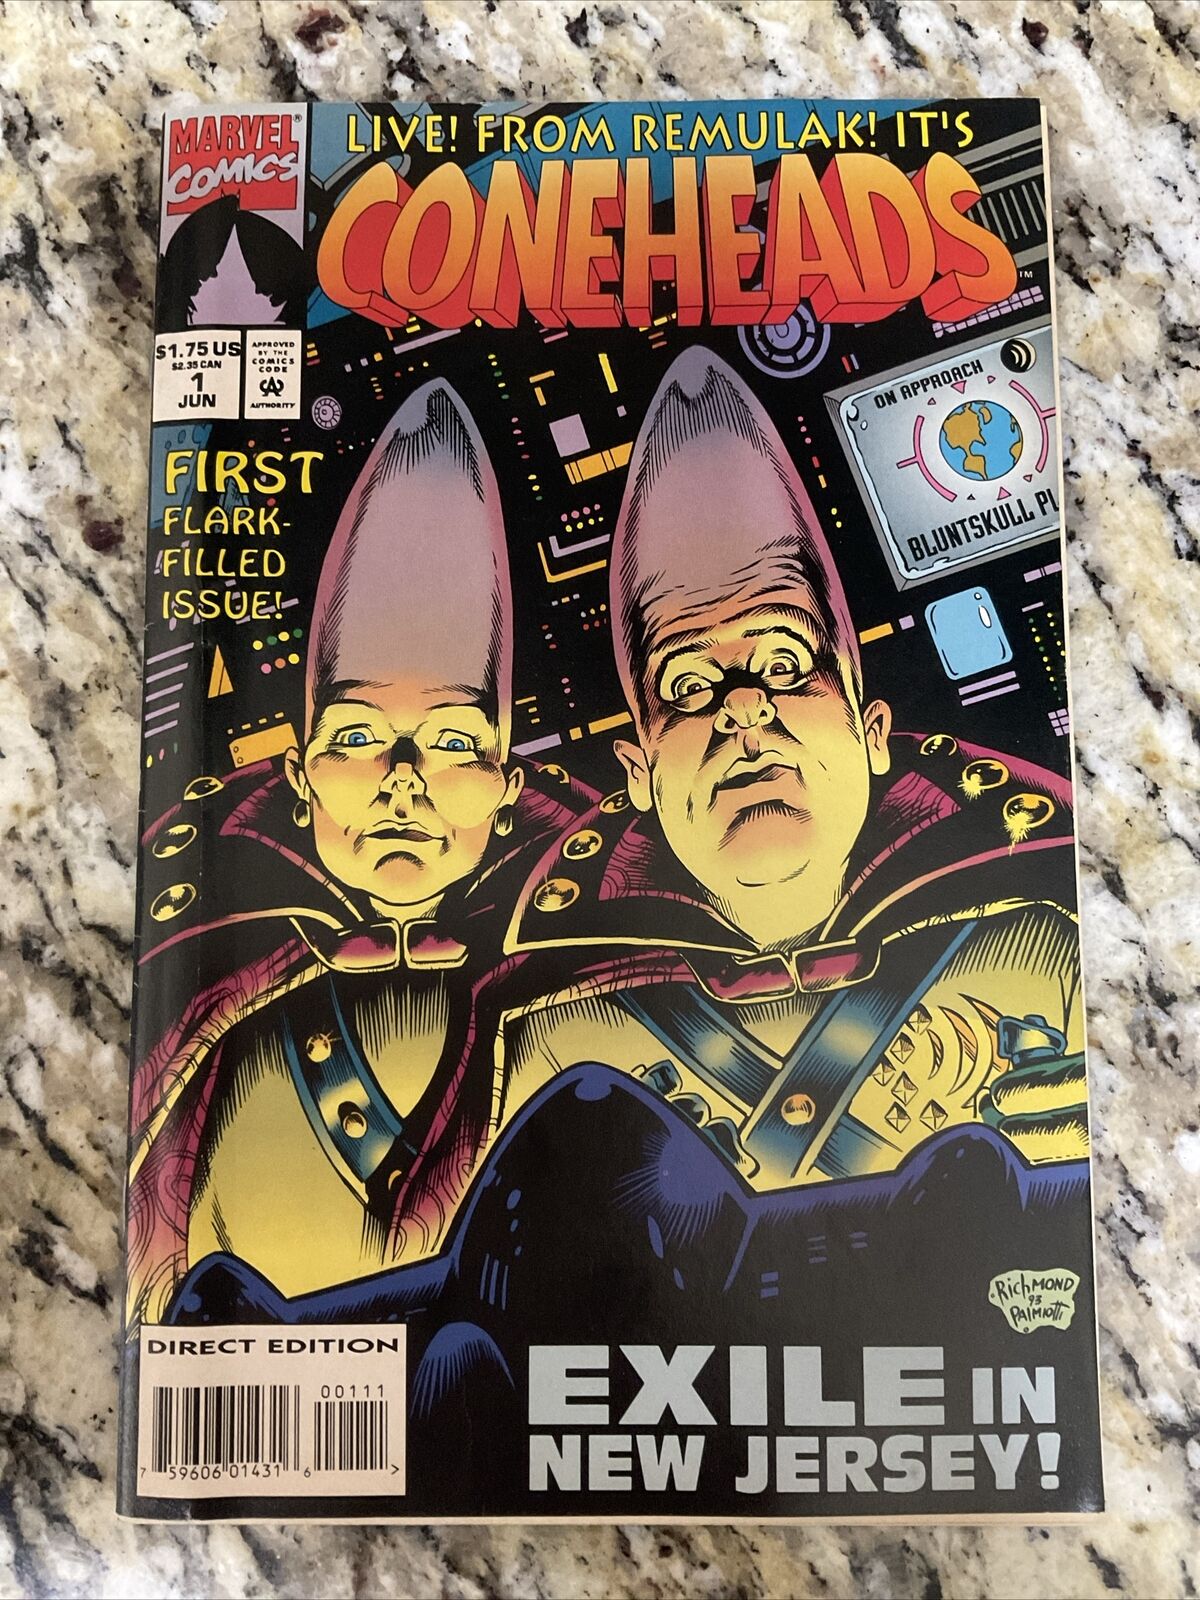 Coneheads #1 (Marvel Comics June 1994) VF-